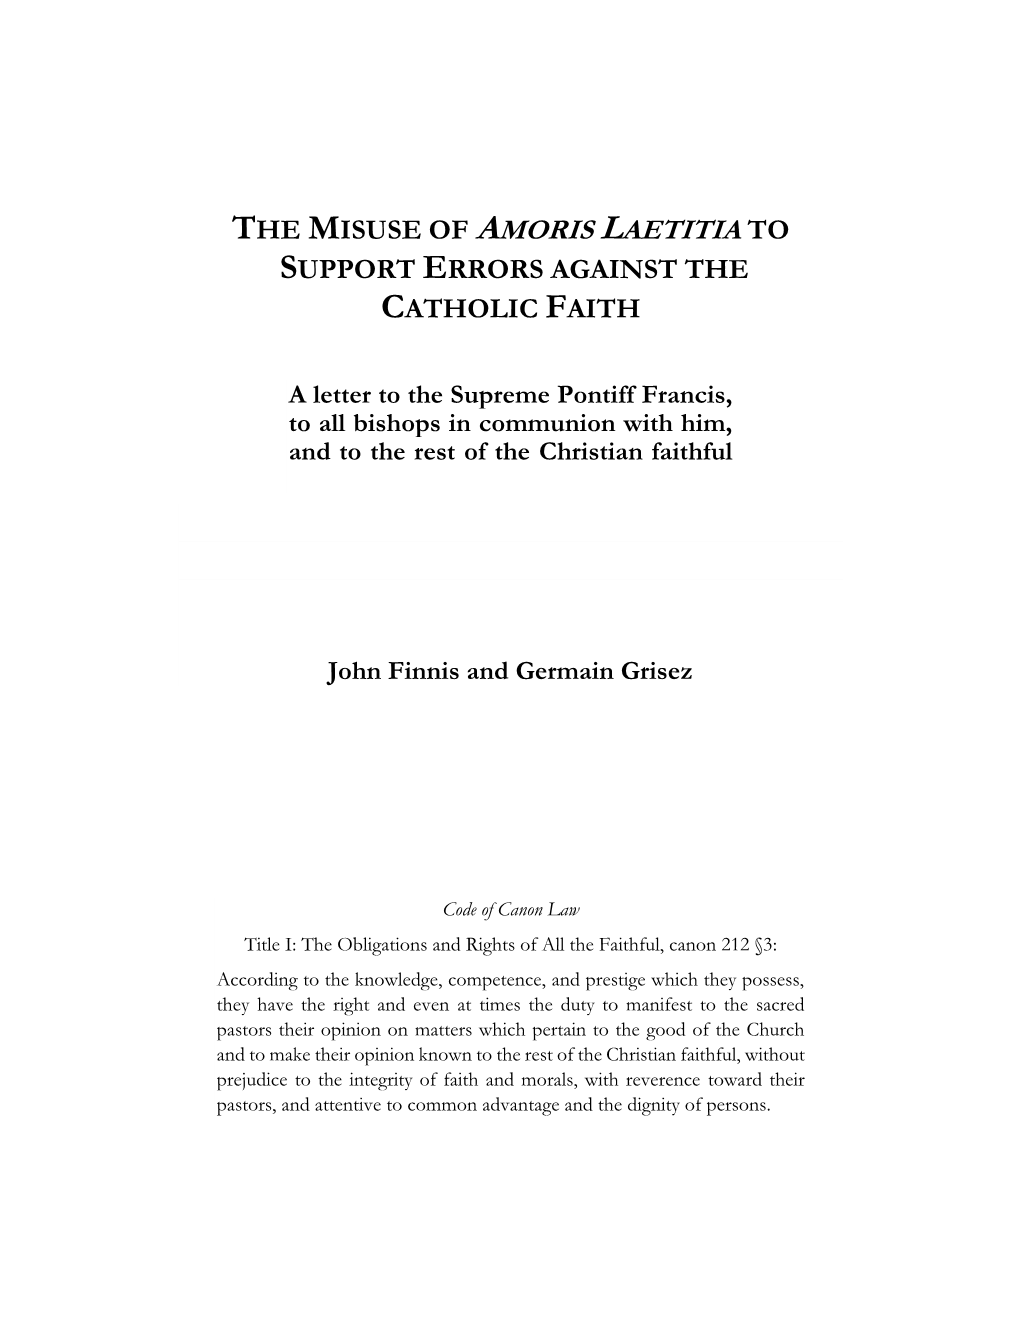 The Misuse of Amoris Laetitia to Support Errors Against the Catholic Faith